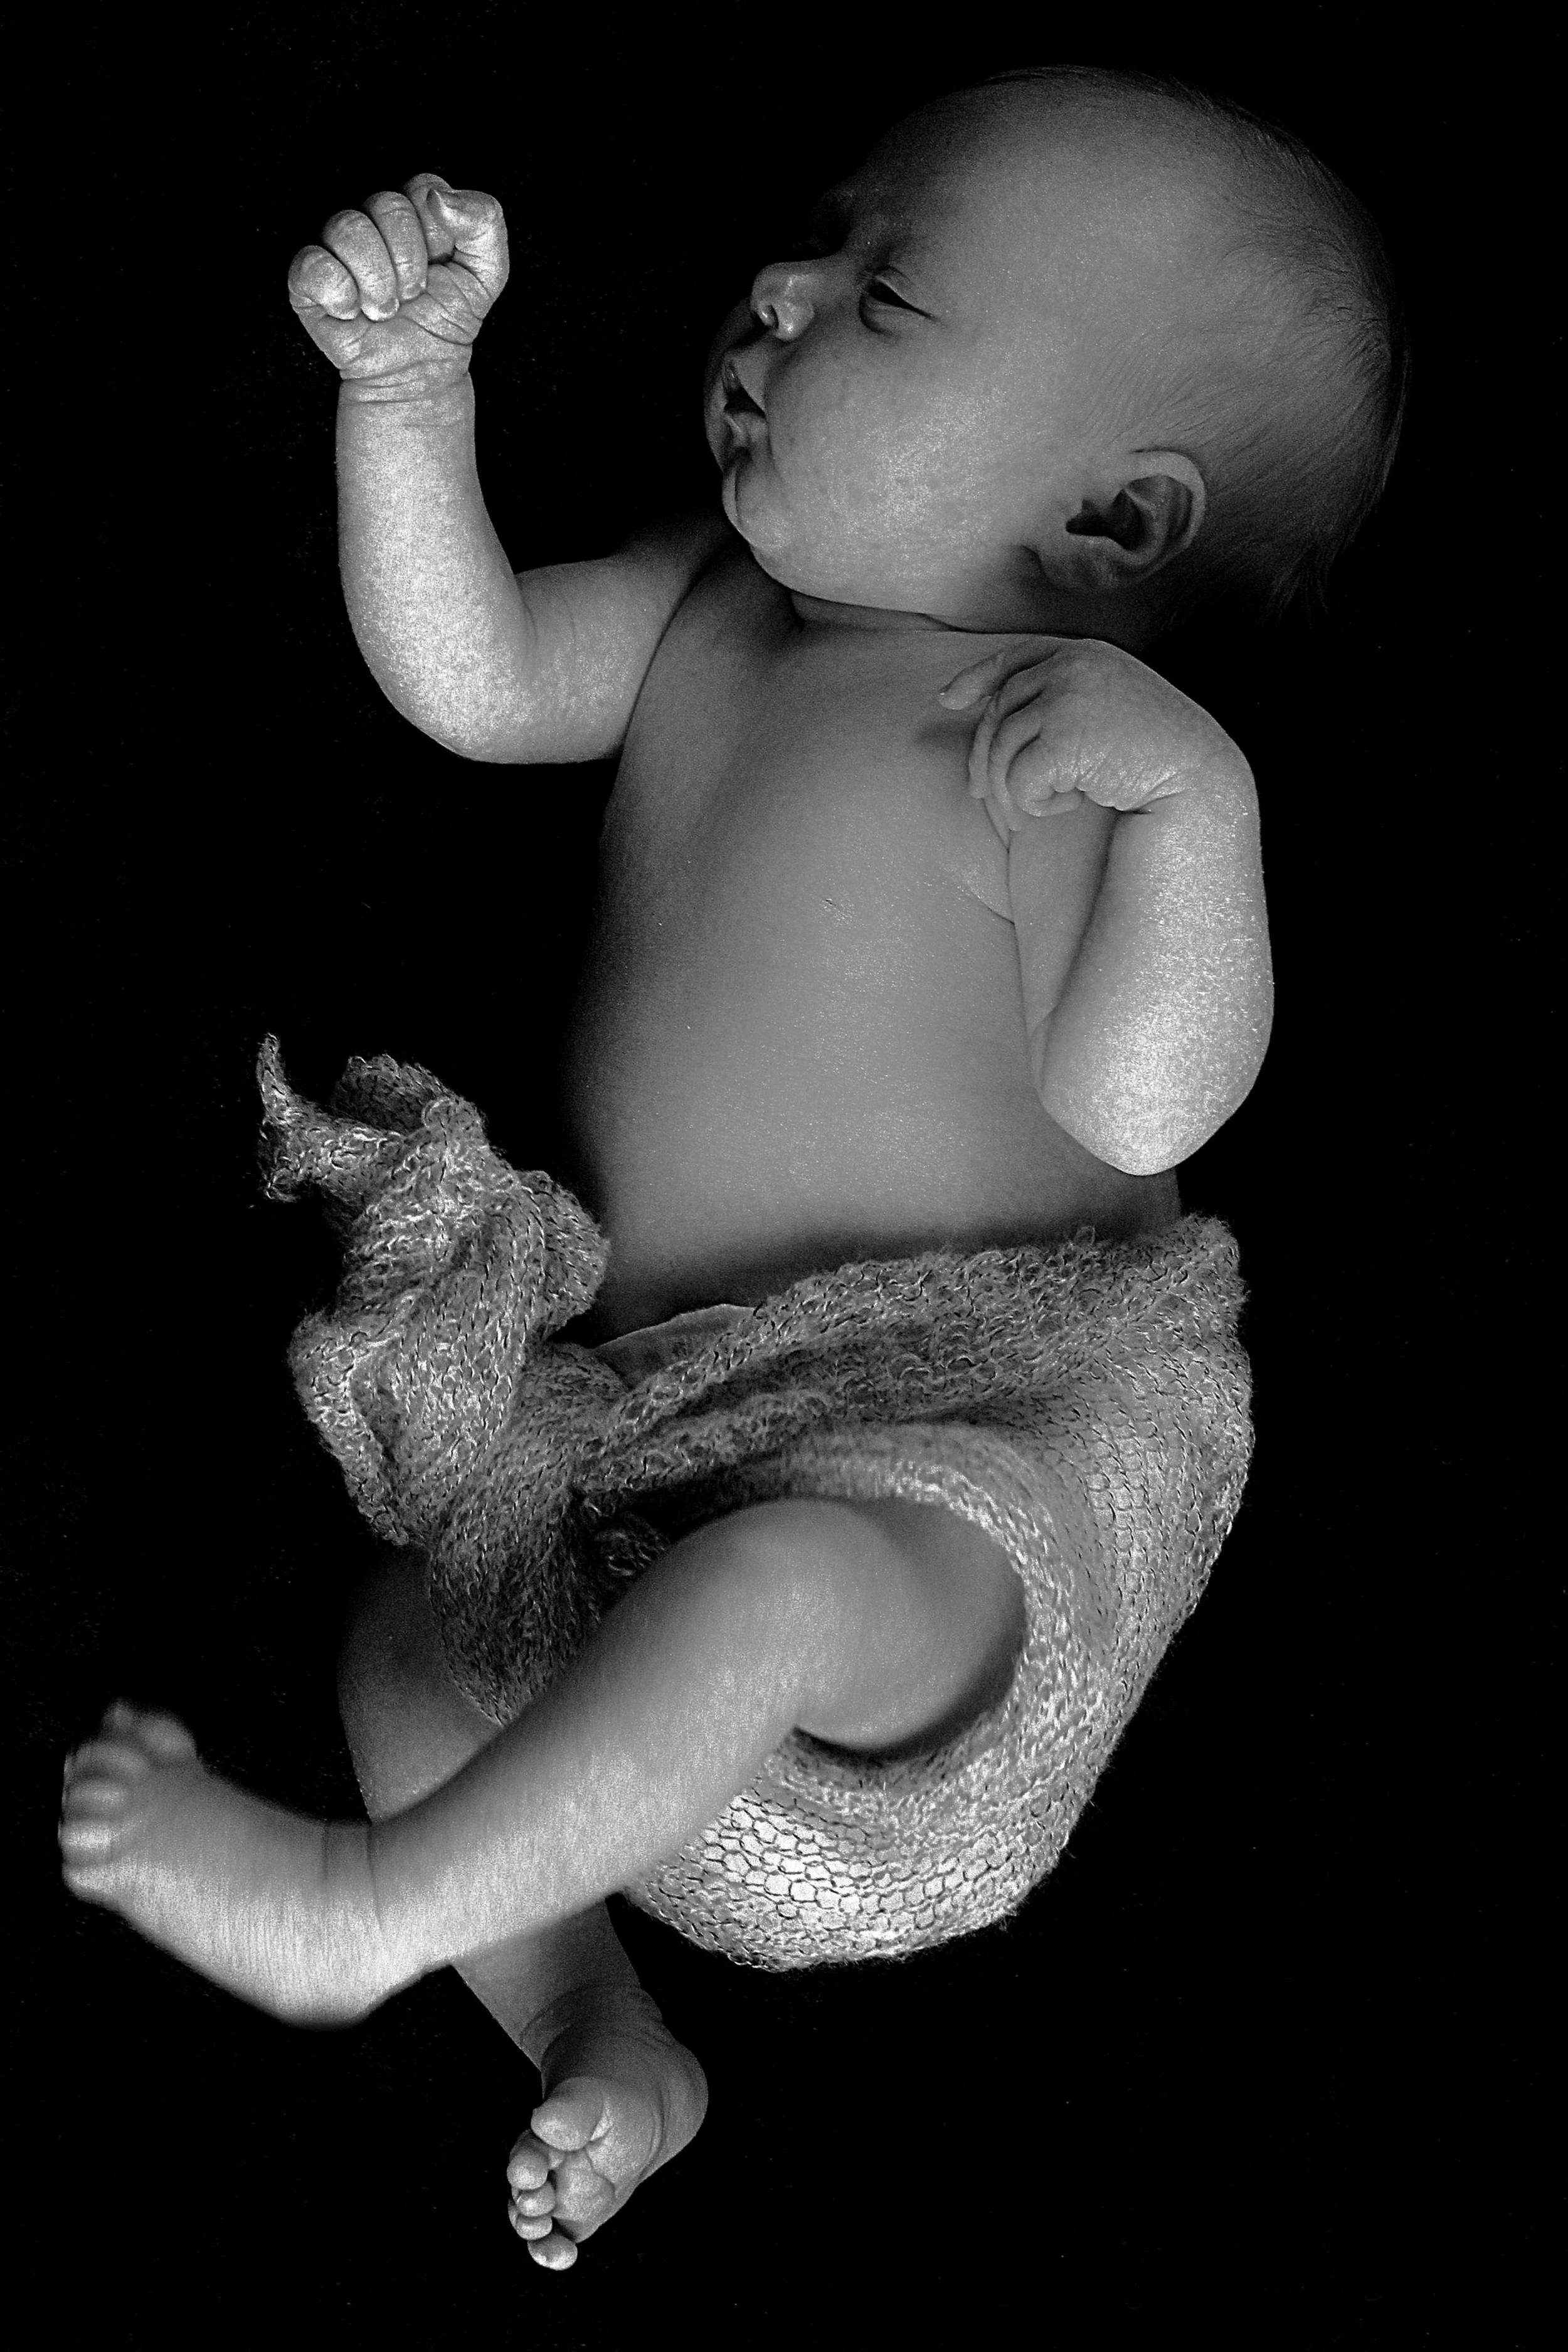 Happix-fotograaf-Nathalie-Joan-Veenendaal-Newborn-_-Baby-fotografie-092_R8lKcMevYtf.jpg